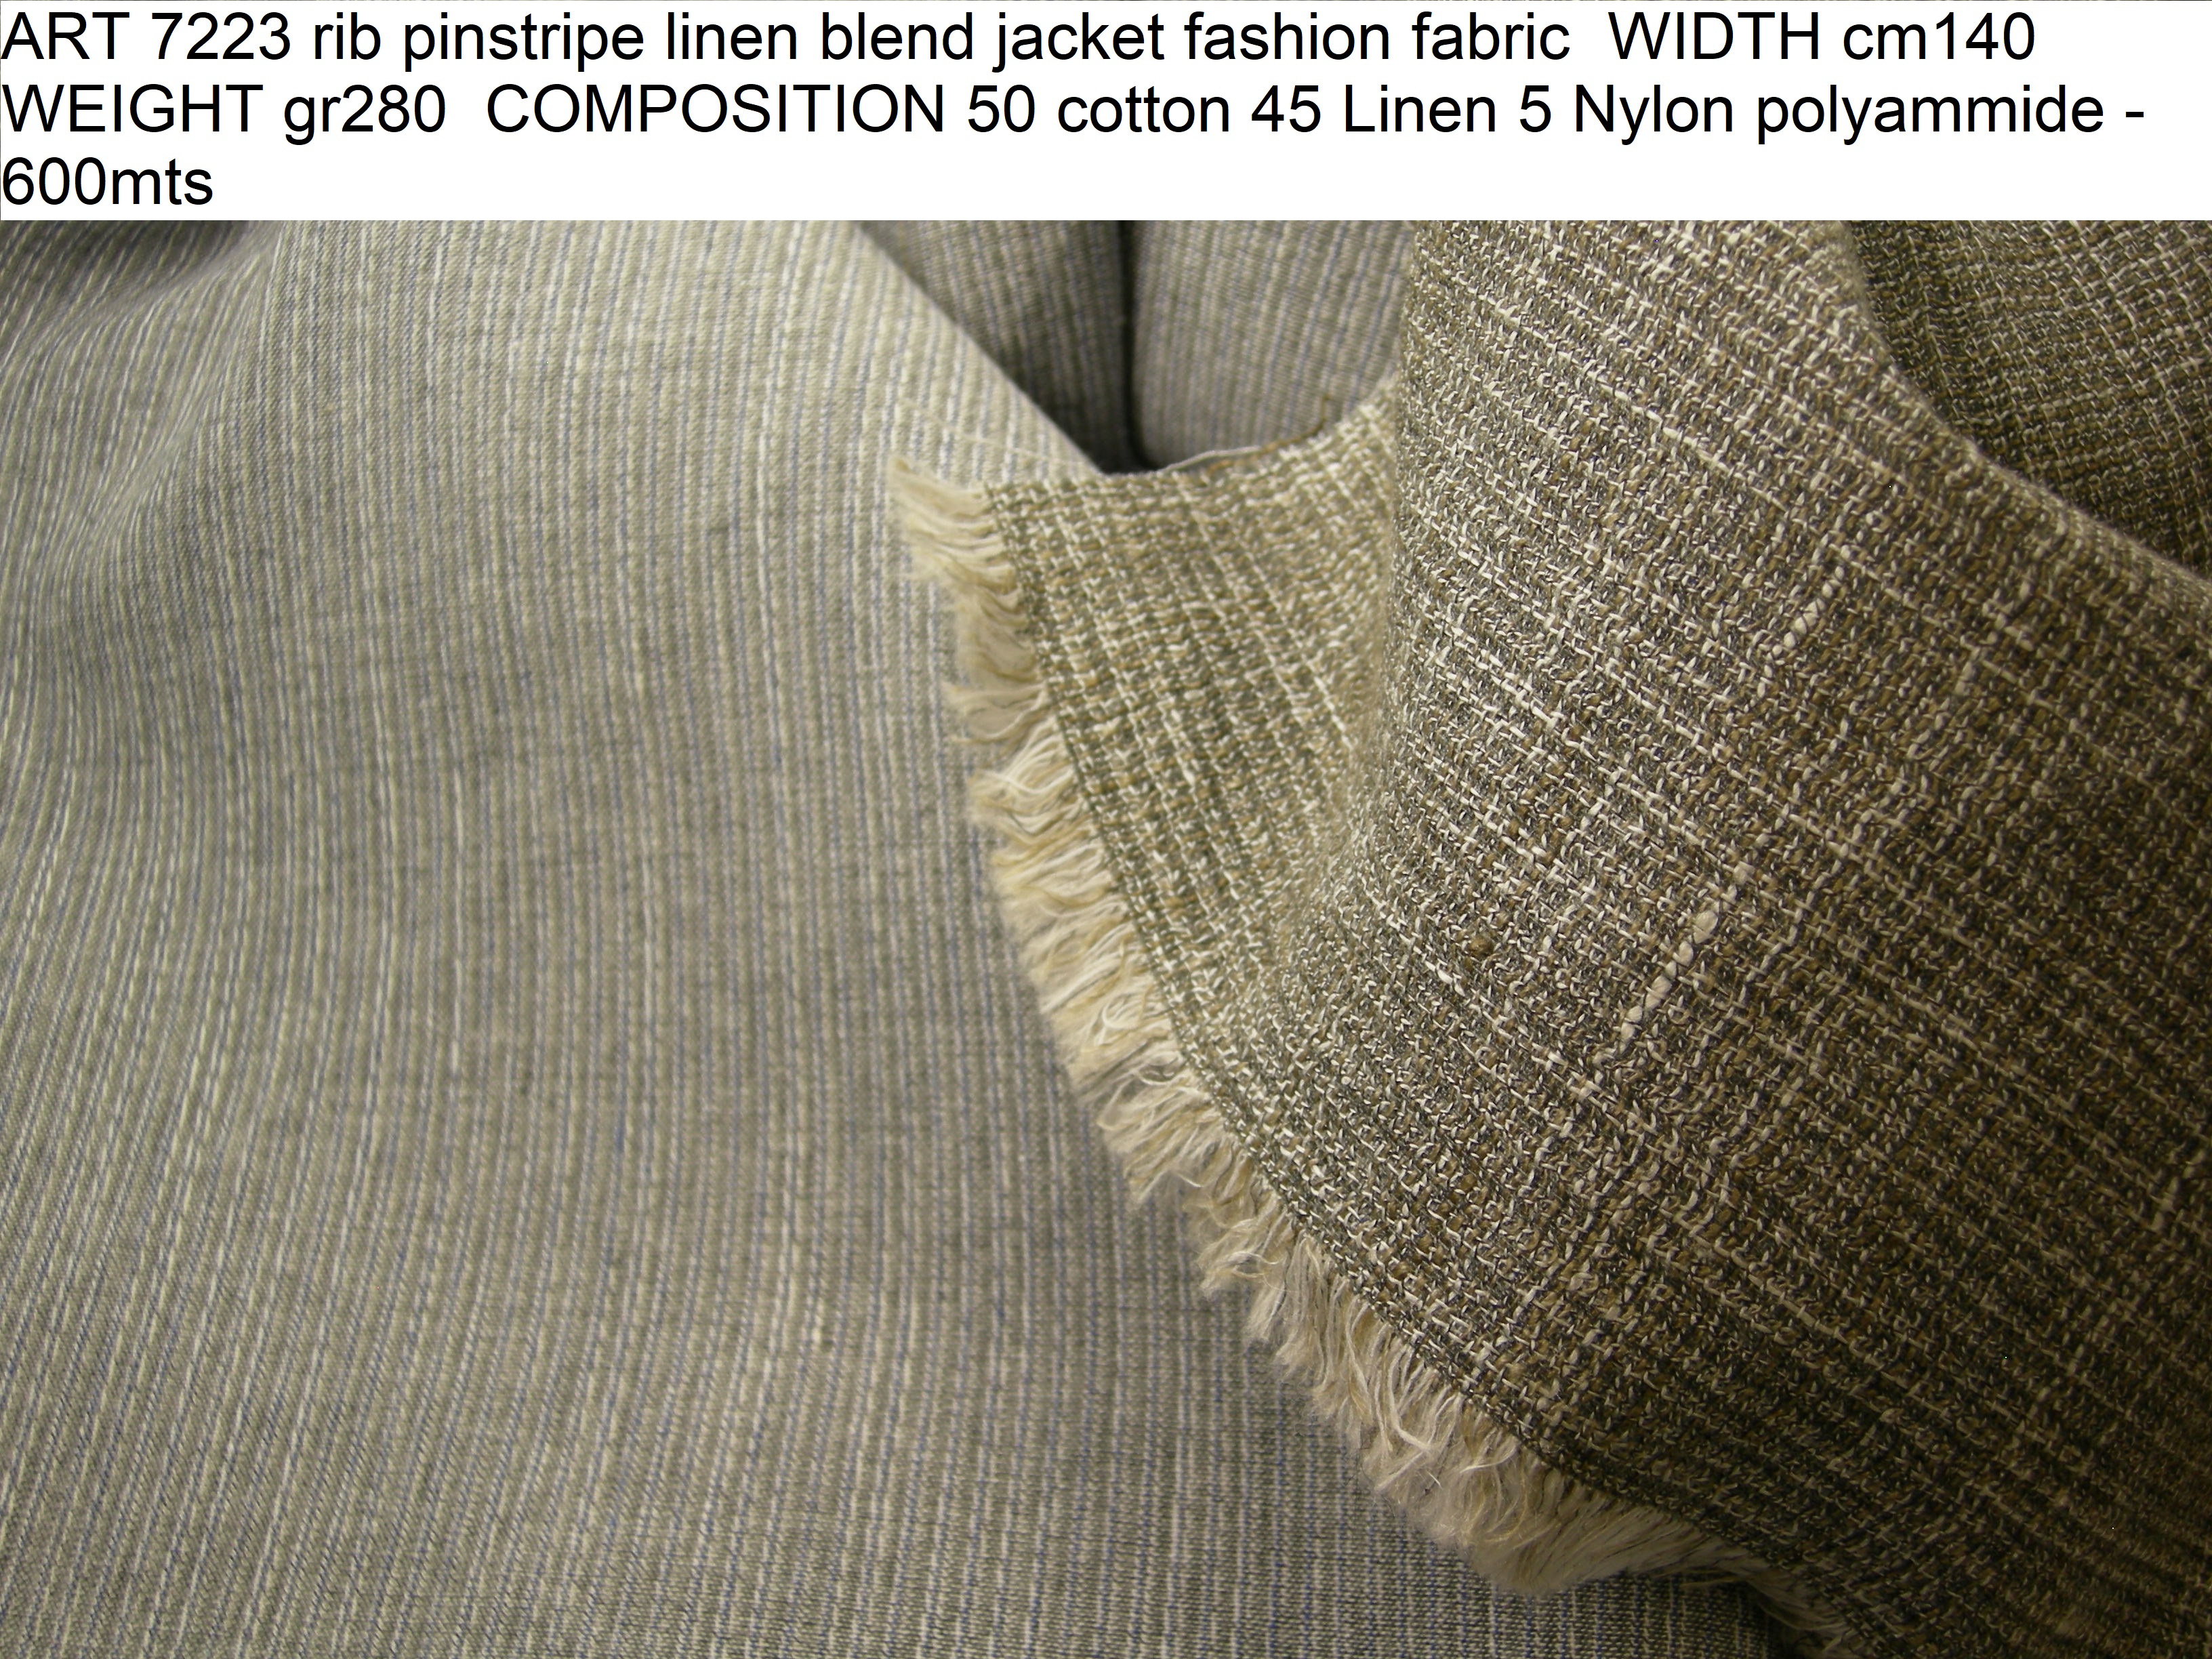 ART 7223 rib pinstripe linen blend jacket fashion fabric WIDTH cm140 WEIGHT gr280 COMPOSITION 50 cotton 45 Linen 5 Nylon polyammide - 600mts